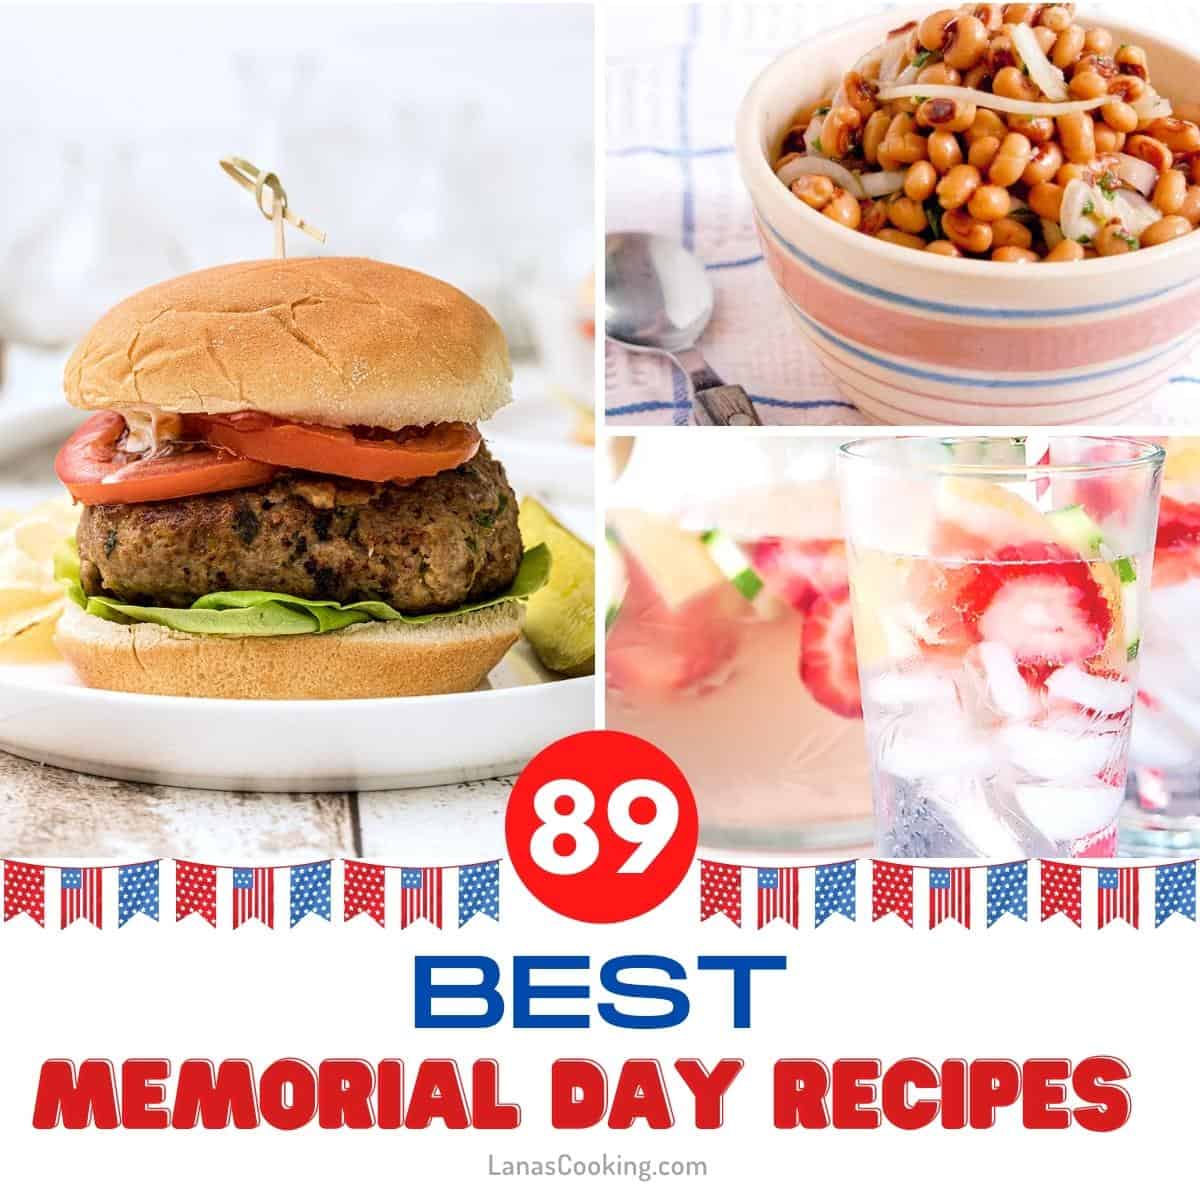 89 Best Memorial Day Recipes